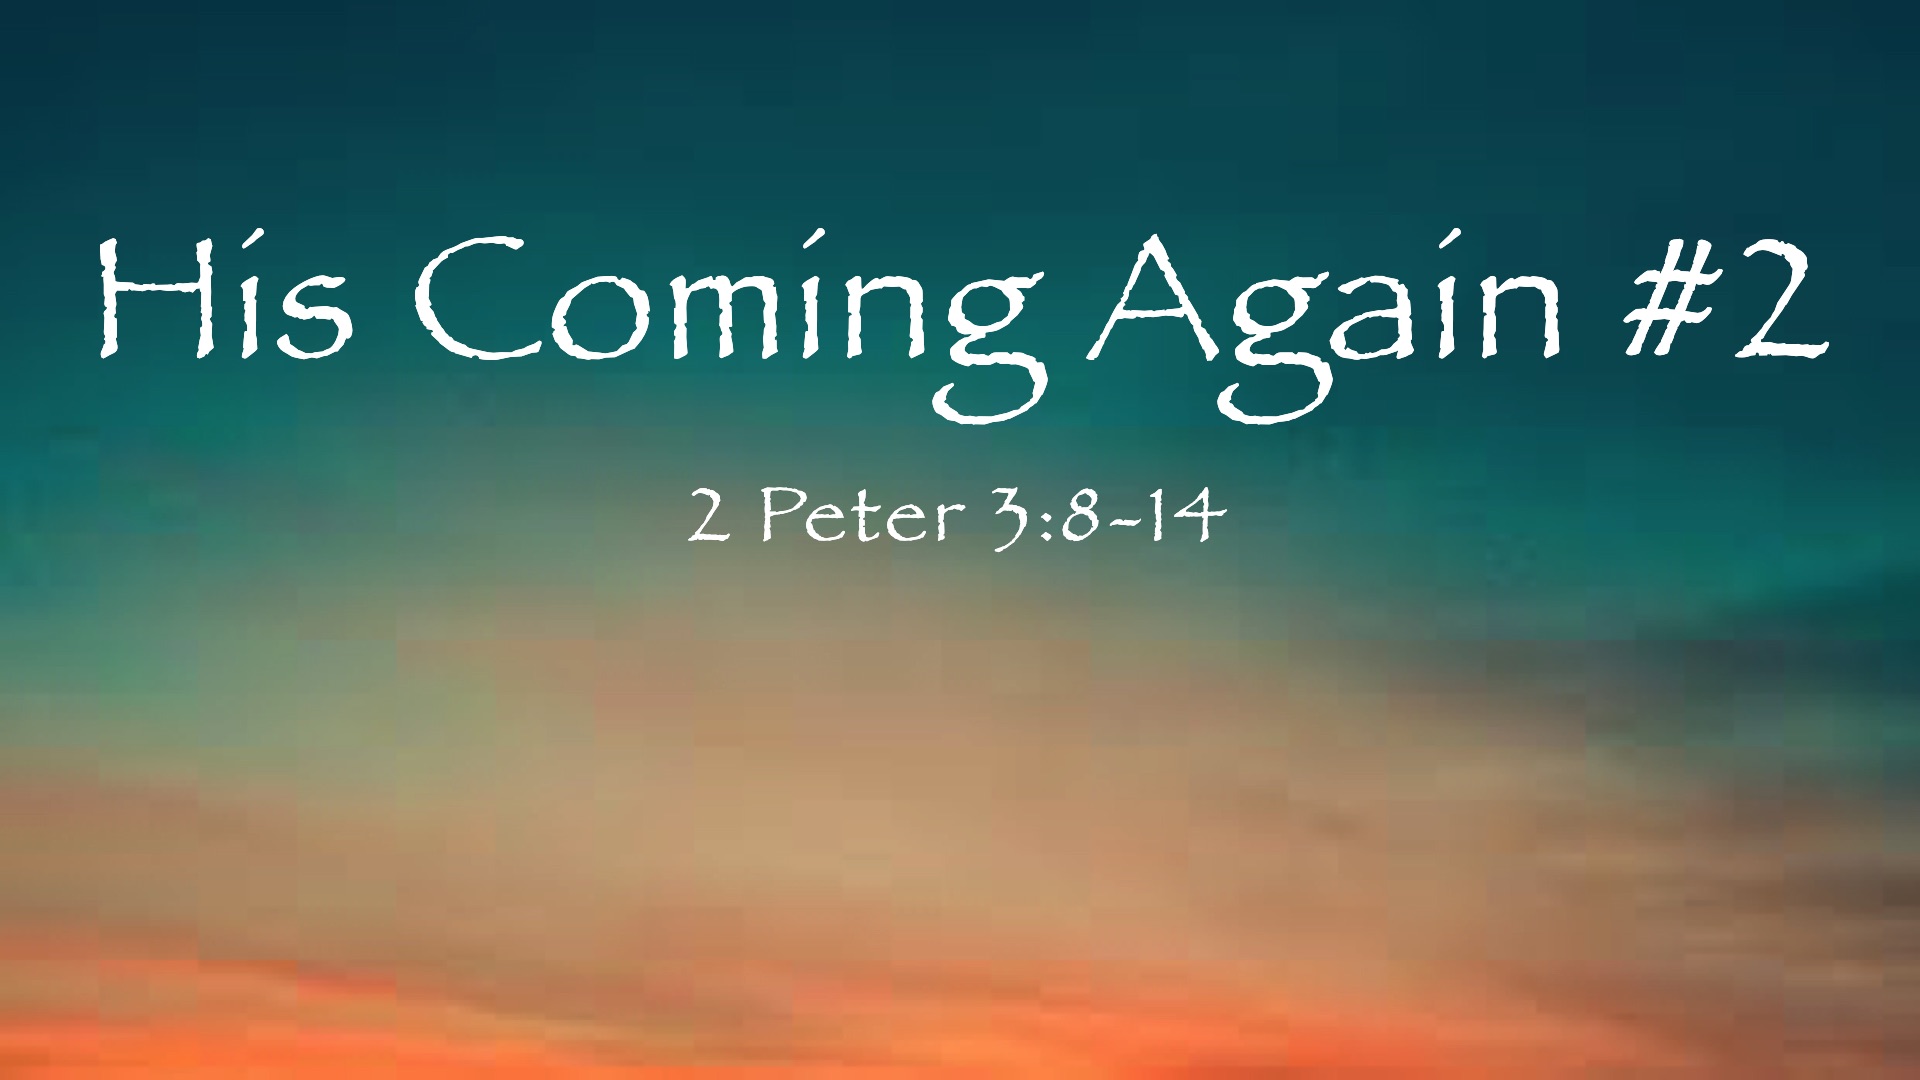 “His Coming Again” Part 2